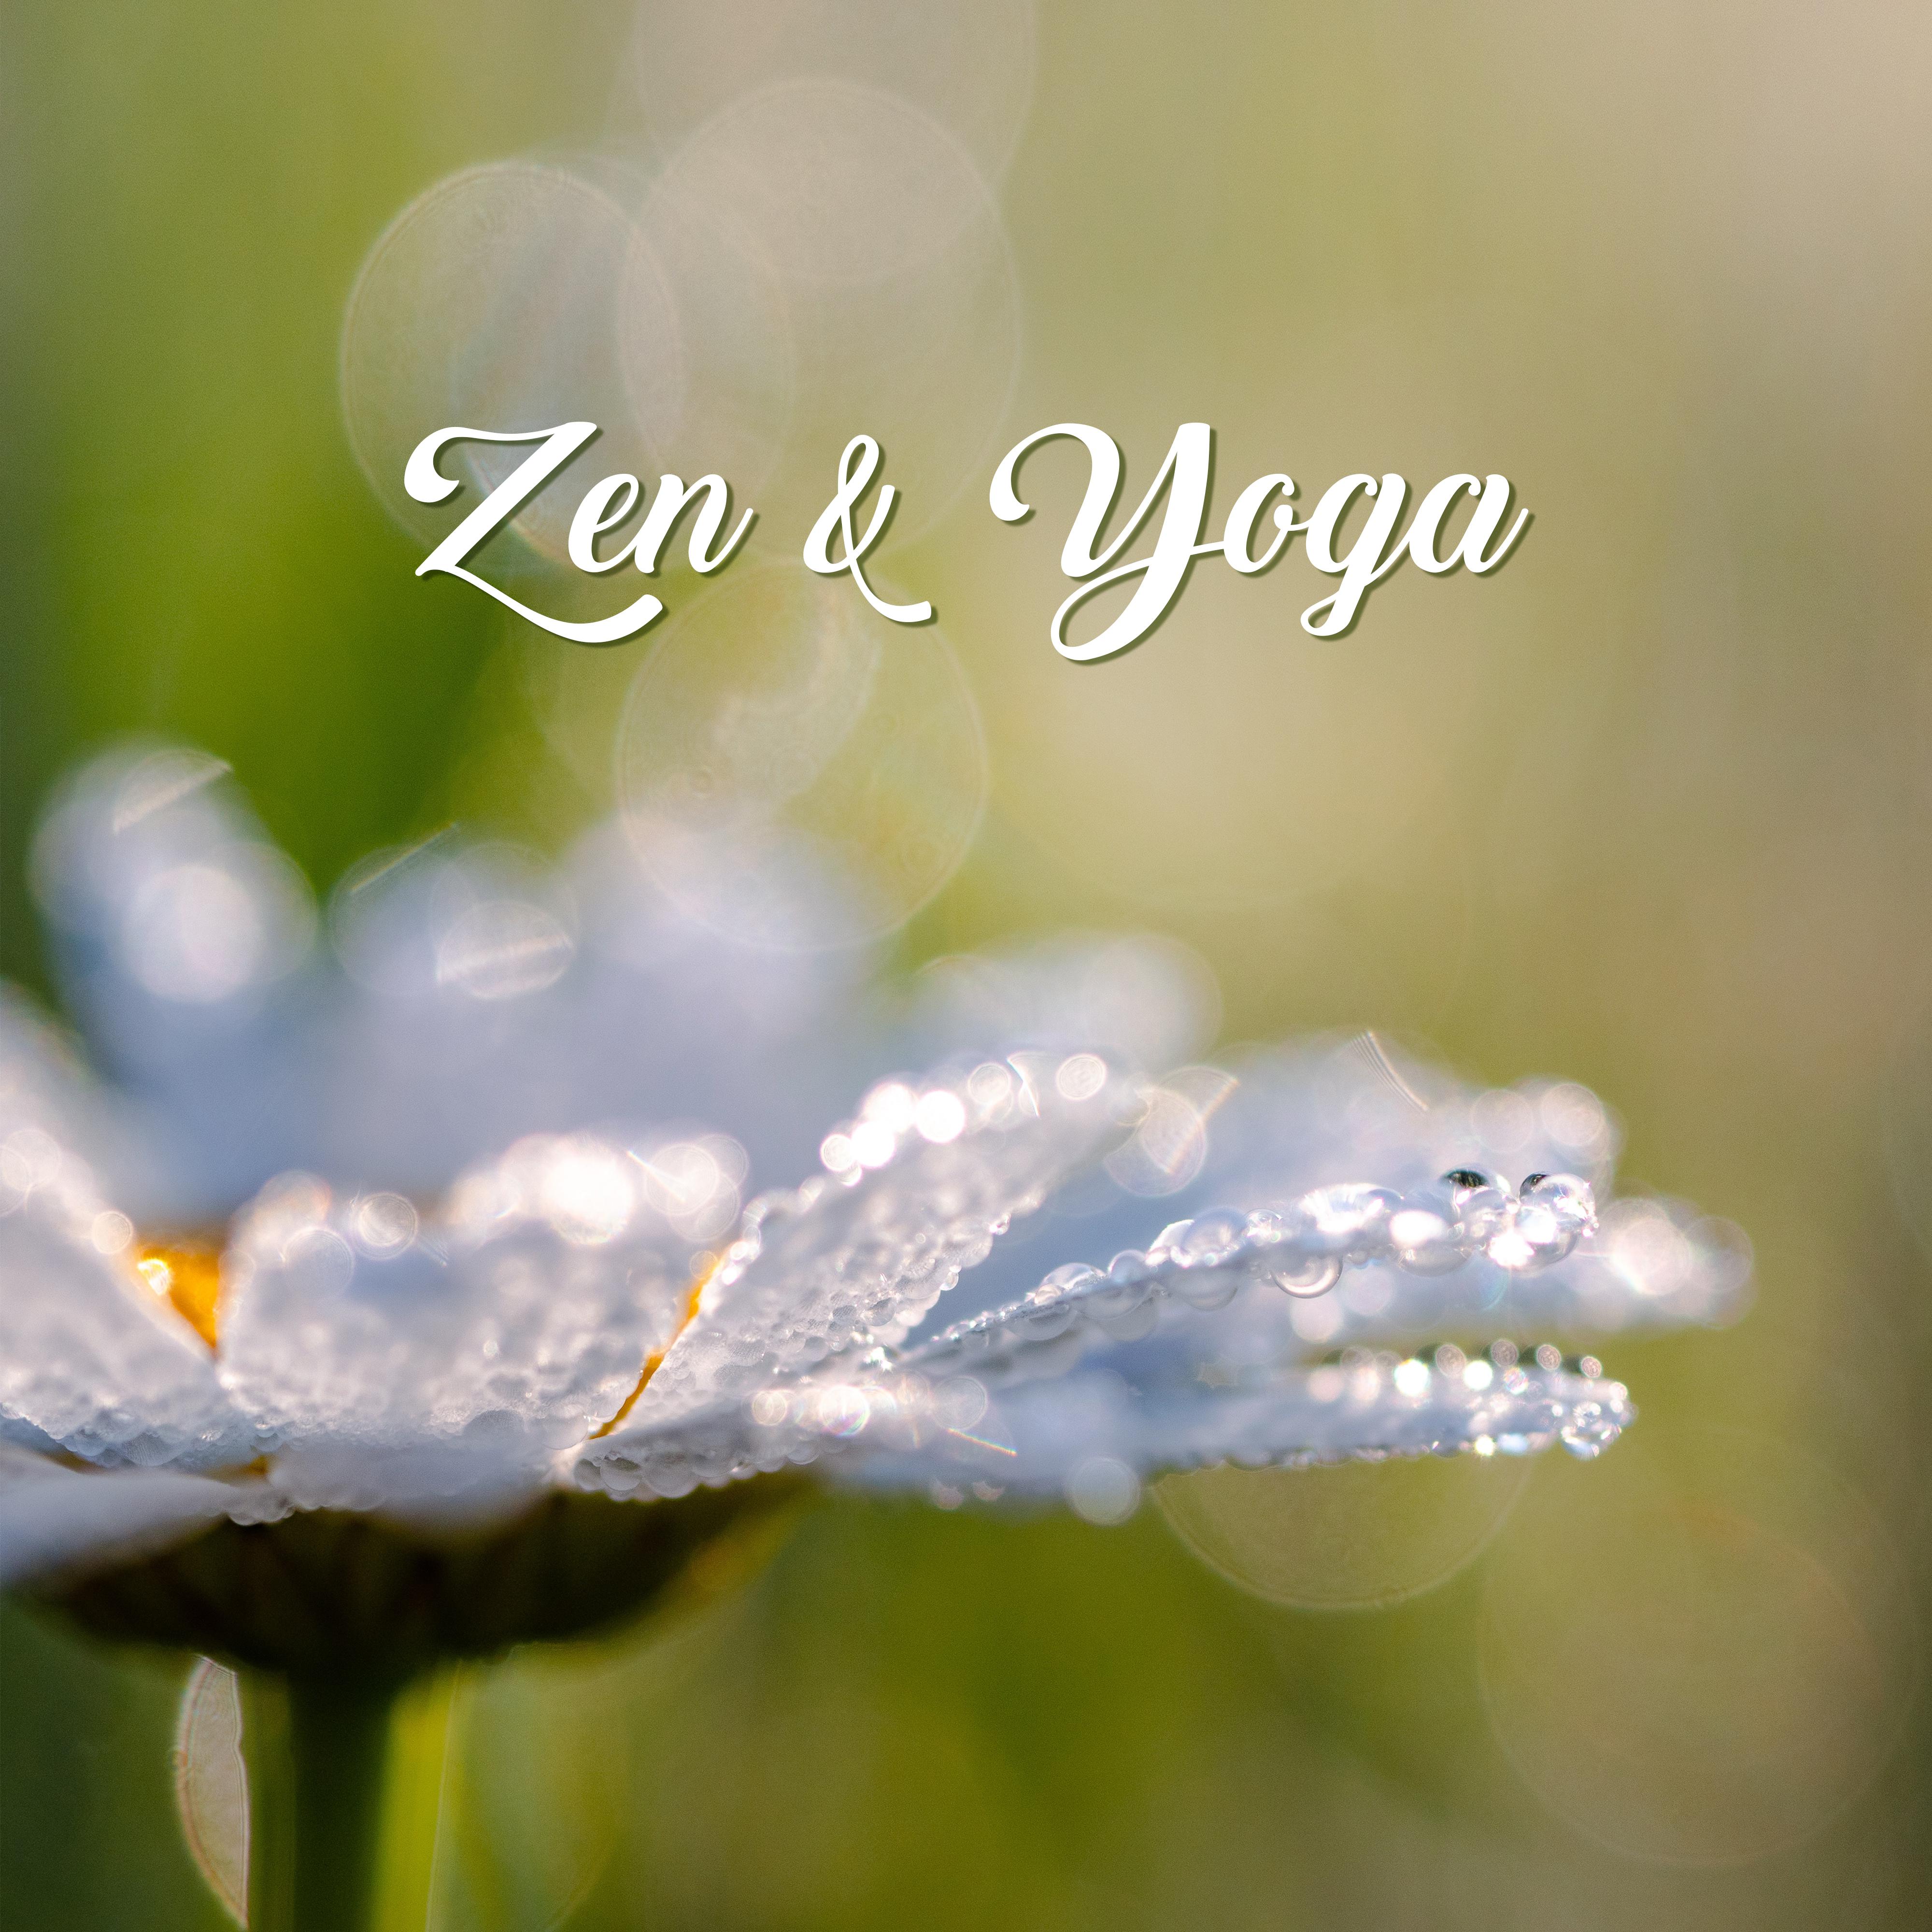 Zen & Yoga: 15 Best Tracks for Meditation Practice, Yoga Exercises and Hindu Contemplation